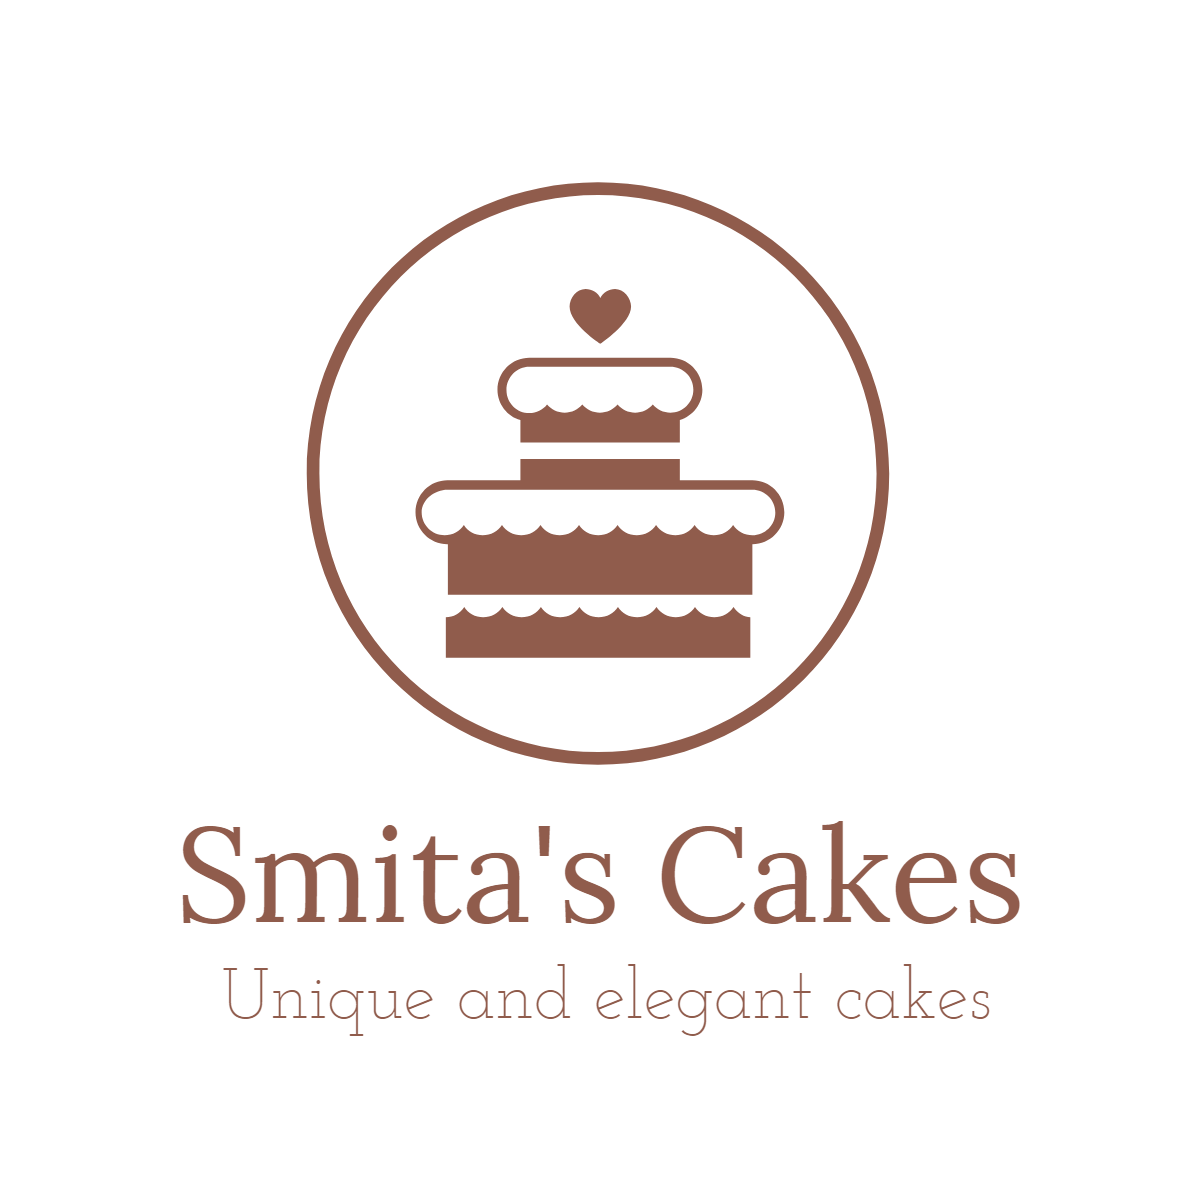 Smita's Cakes